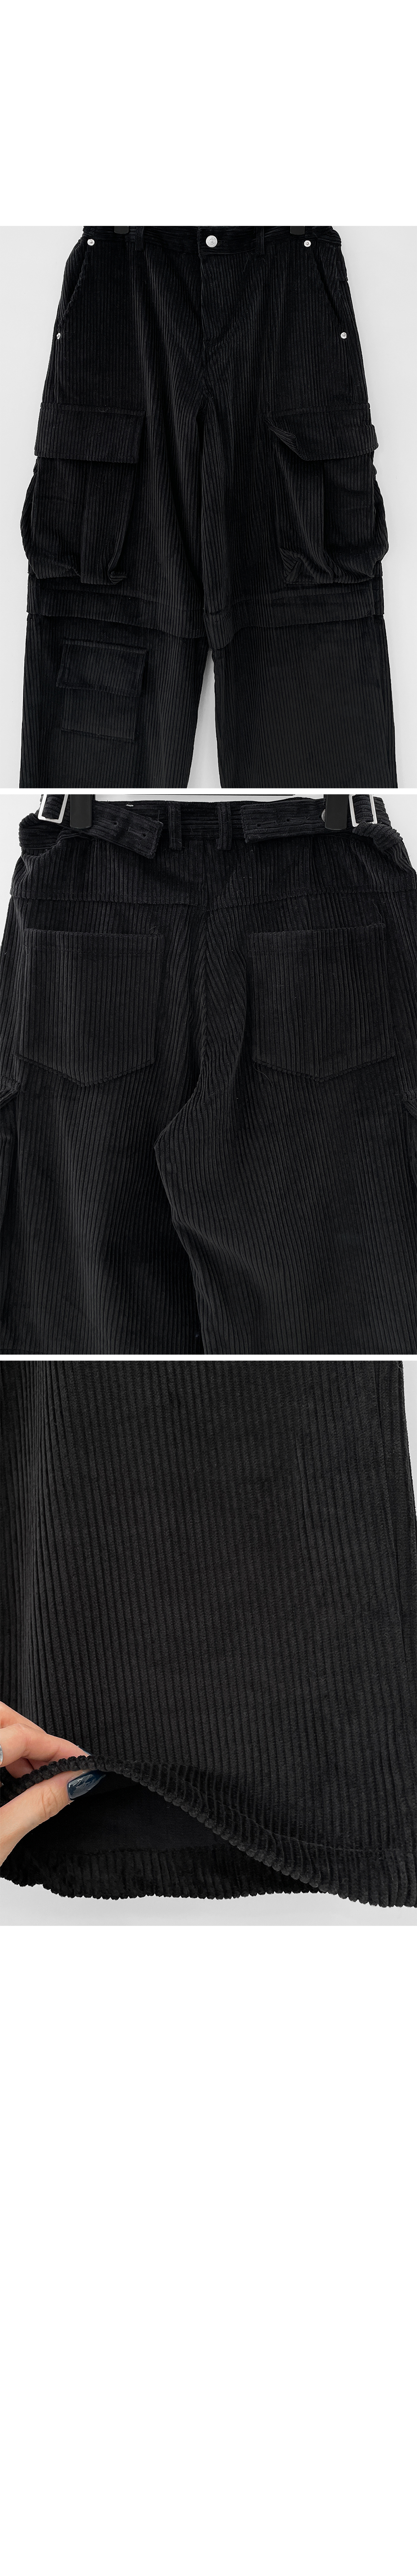 suspenders skirt/pants charcoal color image-S1L13